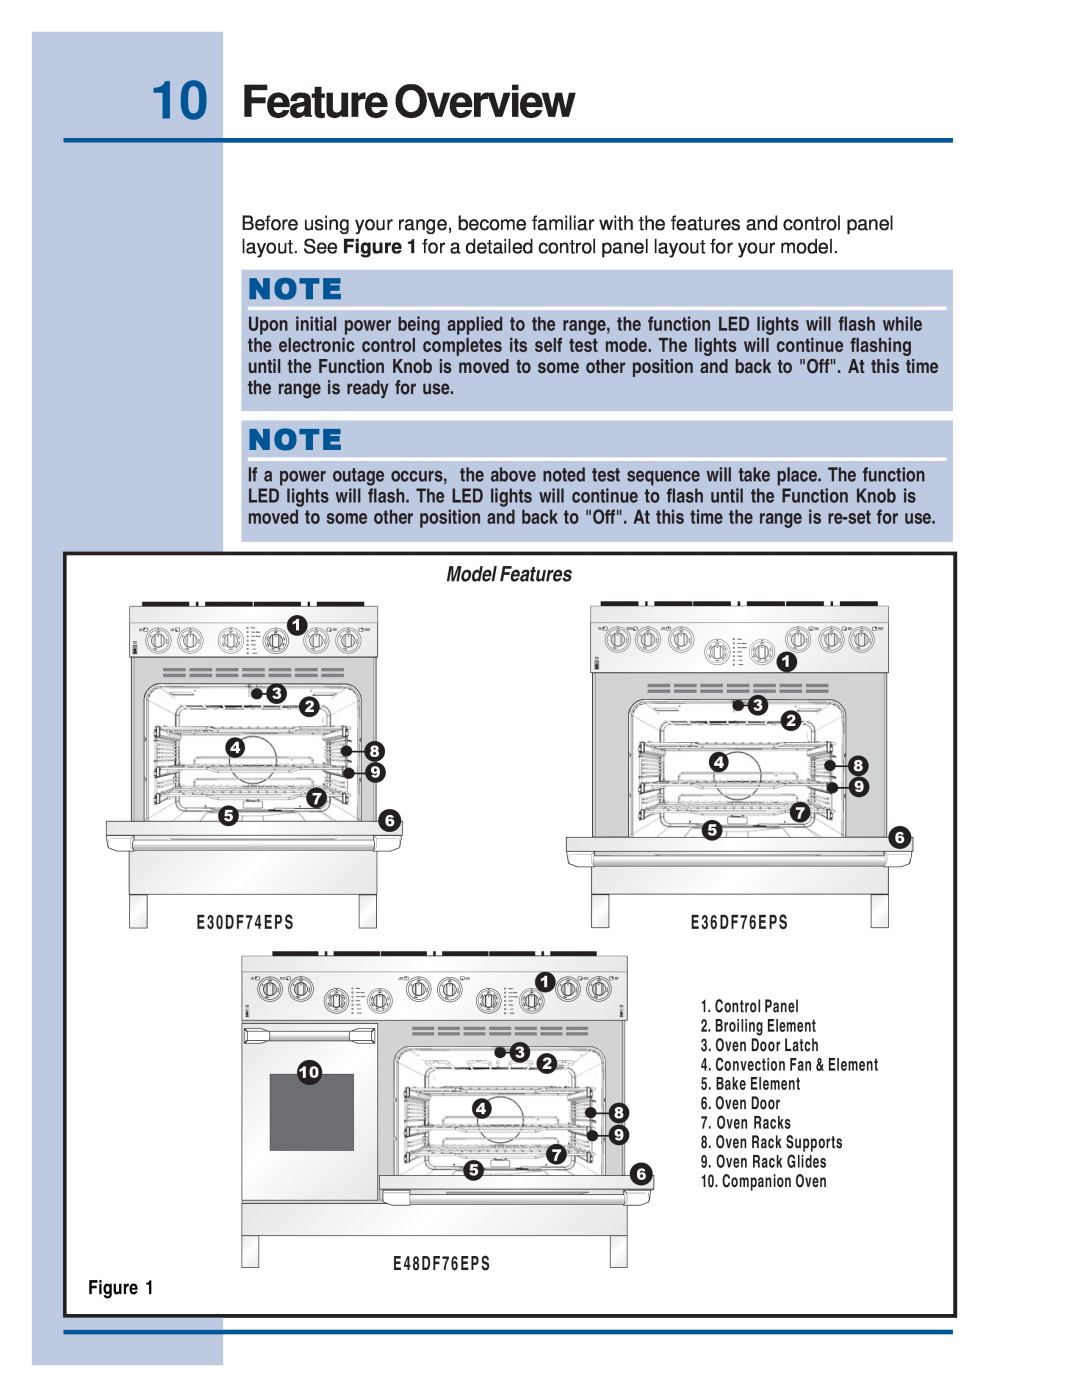 Electrolux E30DF74EPS, E48DF76EPS manual Feature Overview, Model Features, E36DF76EPS 